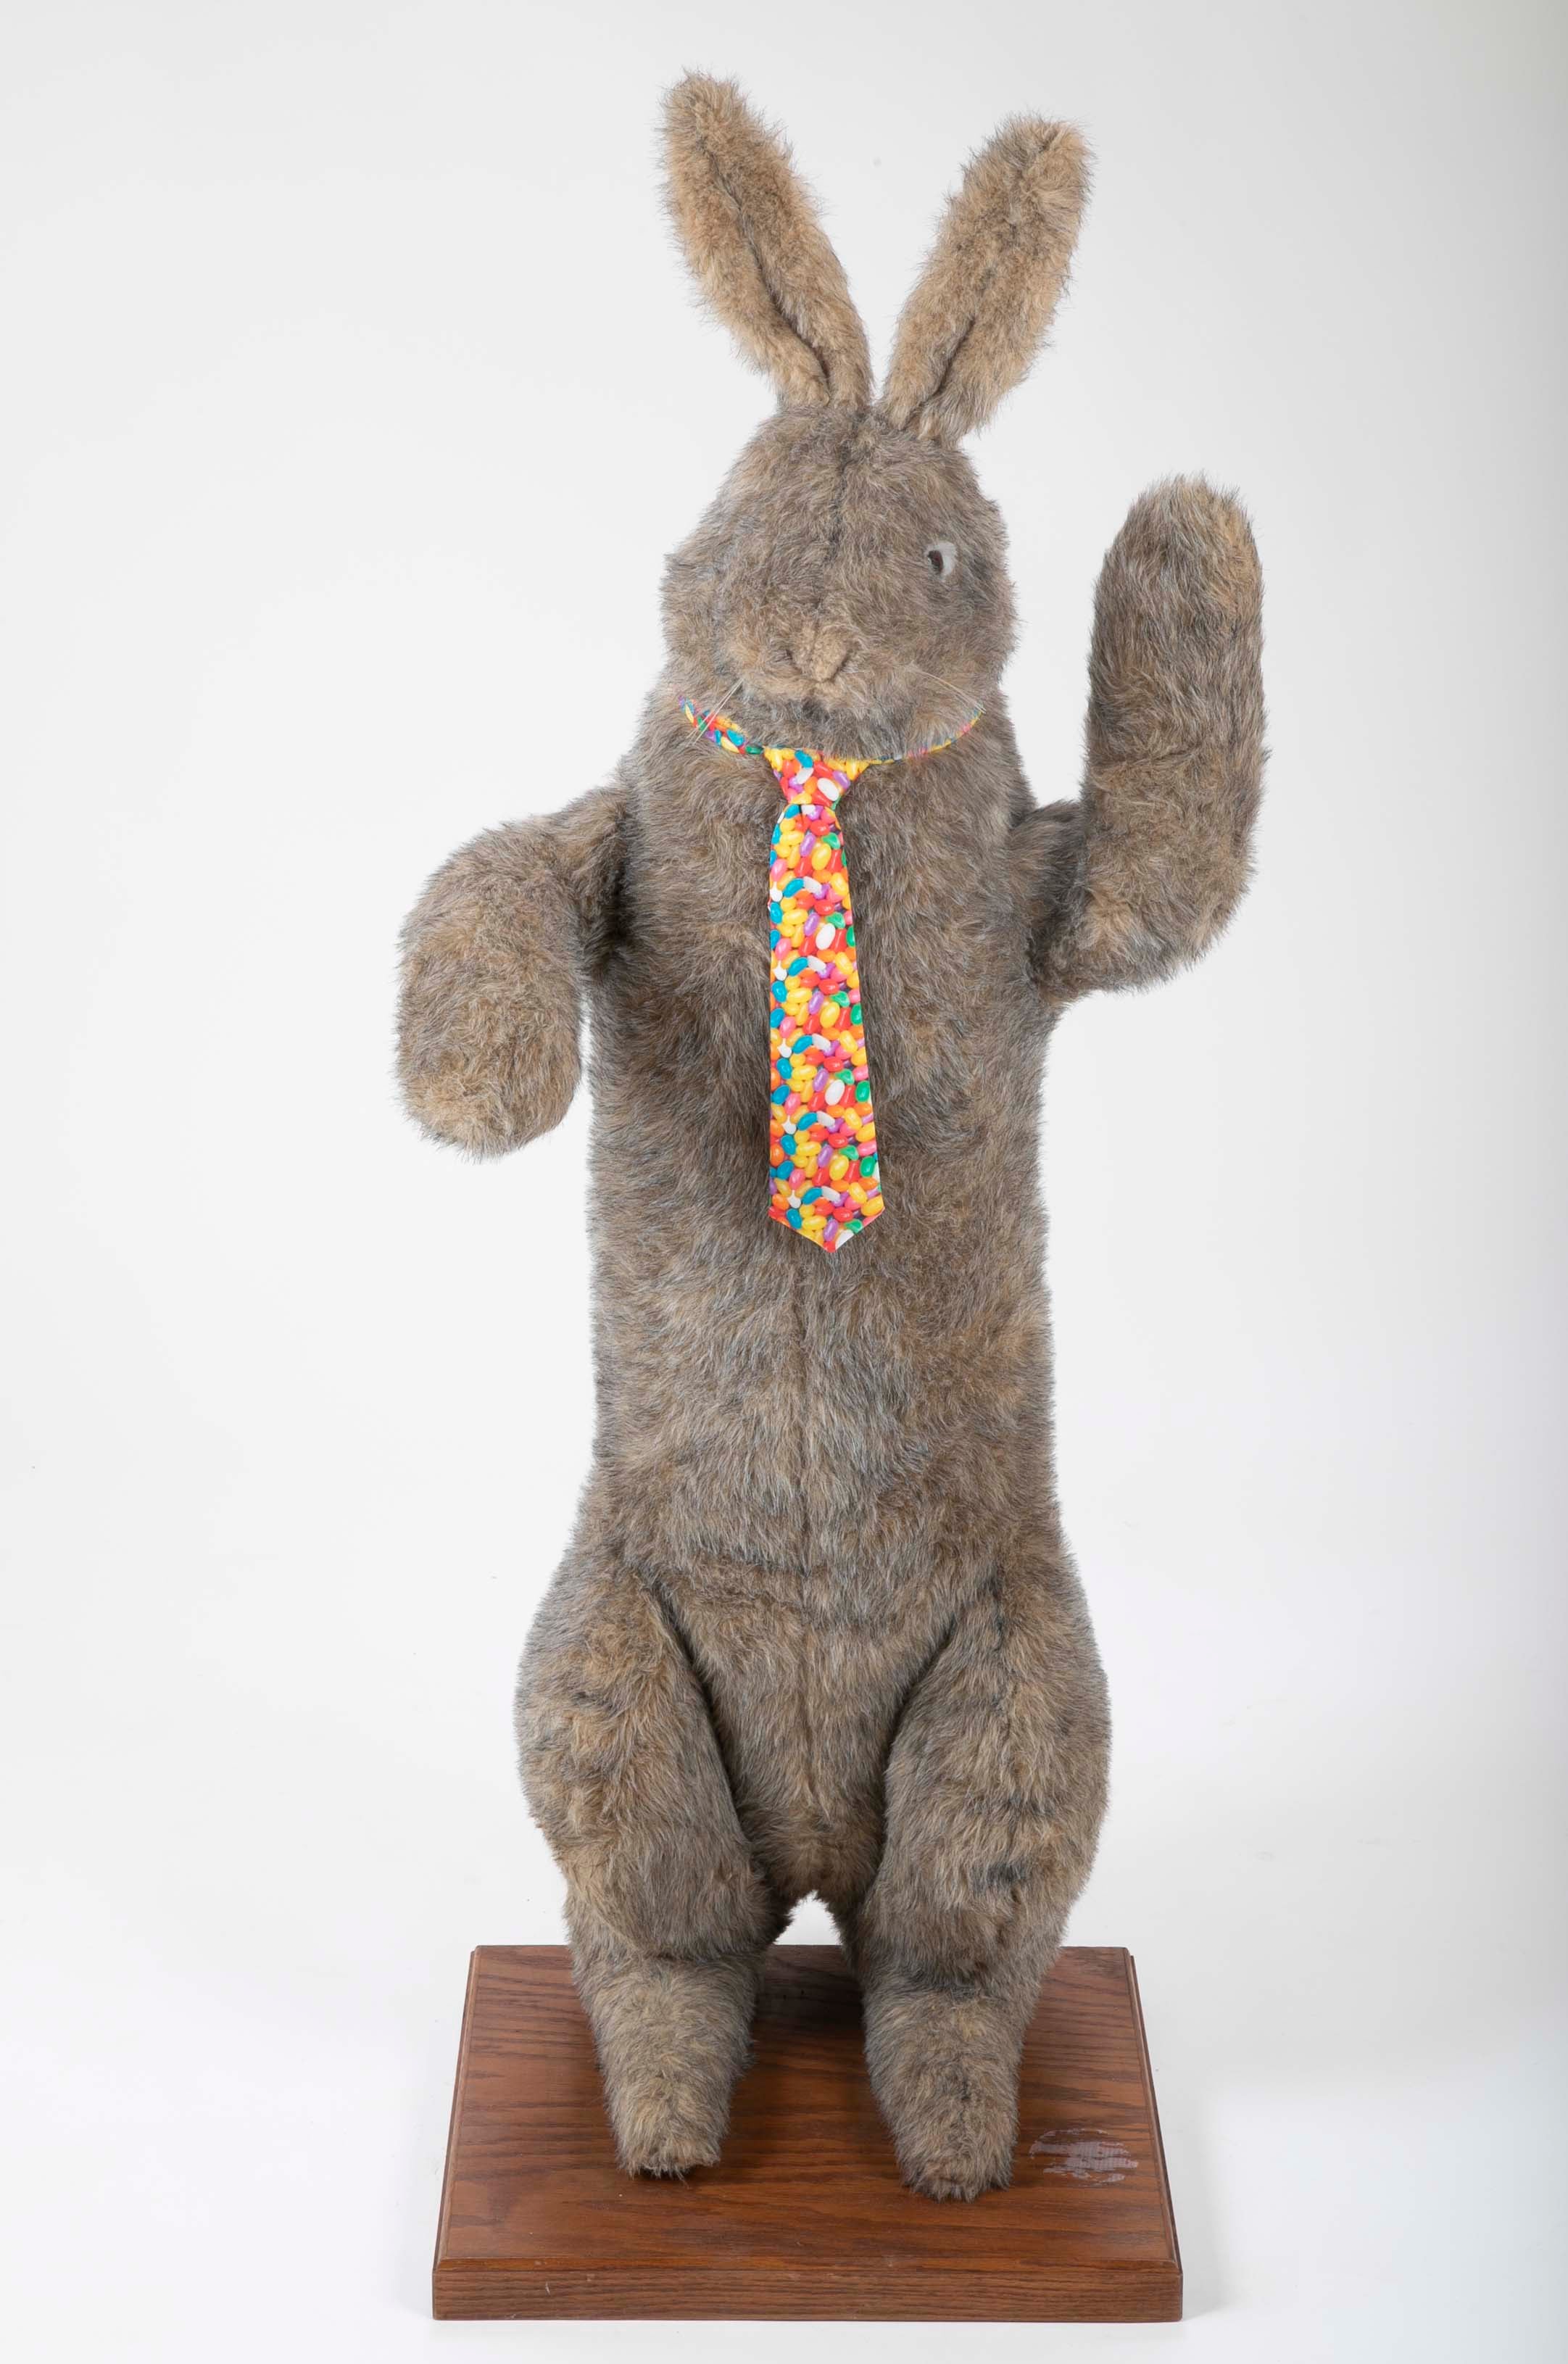 Vintage Department Store Display Rabbit